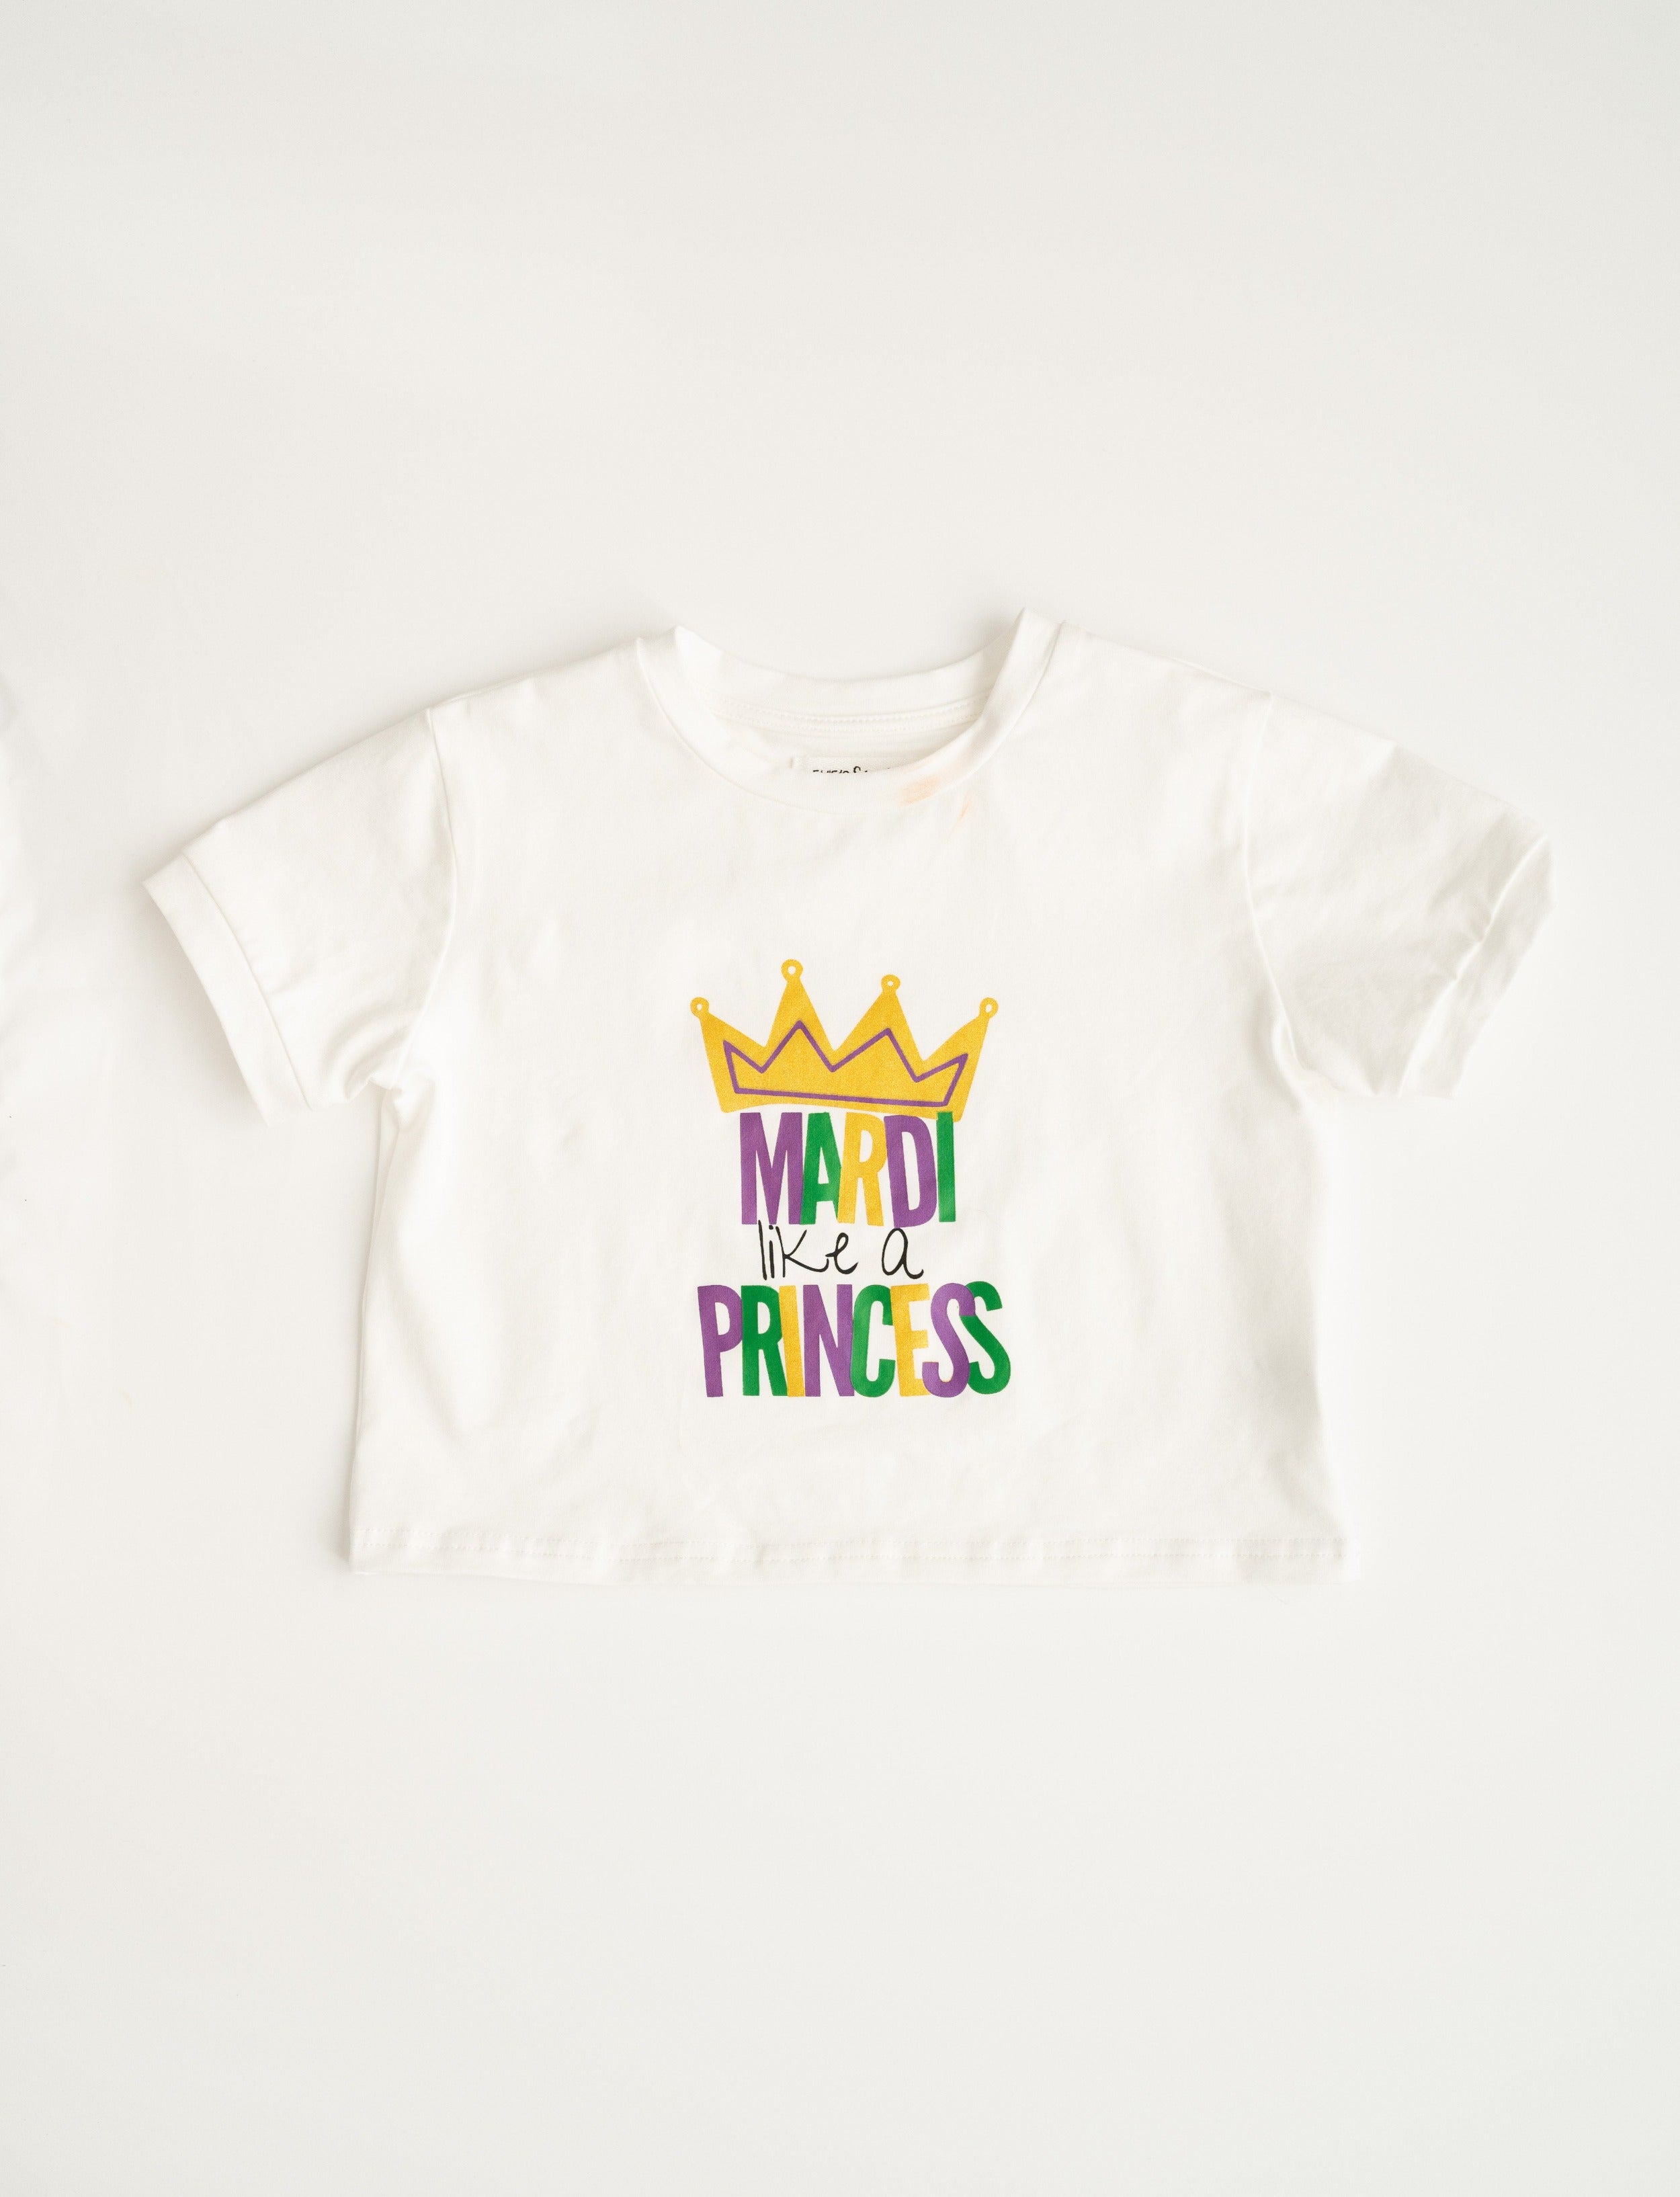 Mardi Like a Princess Shirt - Evie's Closet Clothing